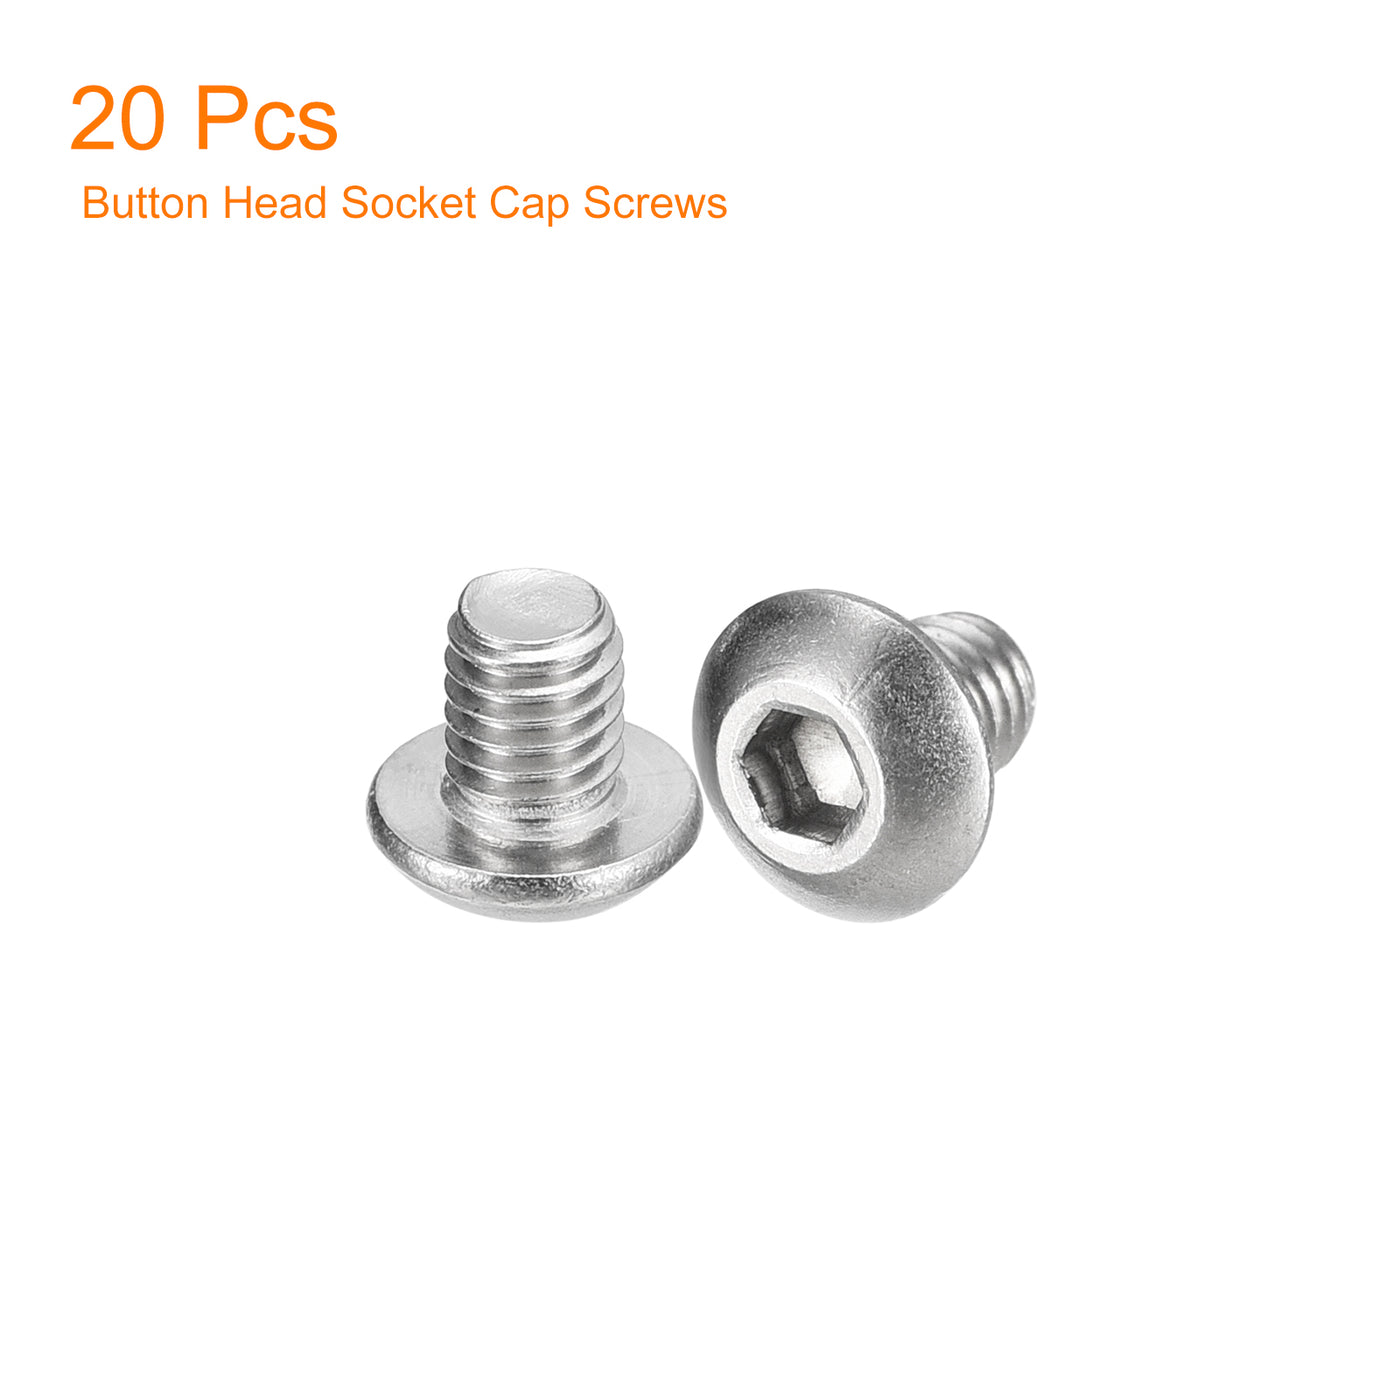 uxcell Uxcell #10-32x1/4" Button Head Socket Cap Screws, 20pcs 304 Stainless Steel Screws